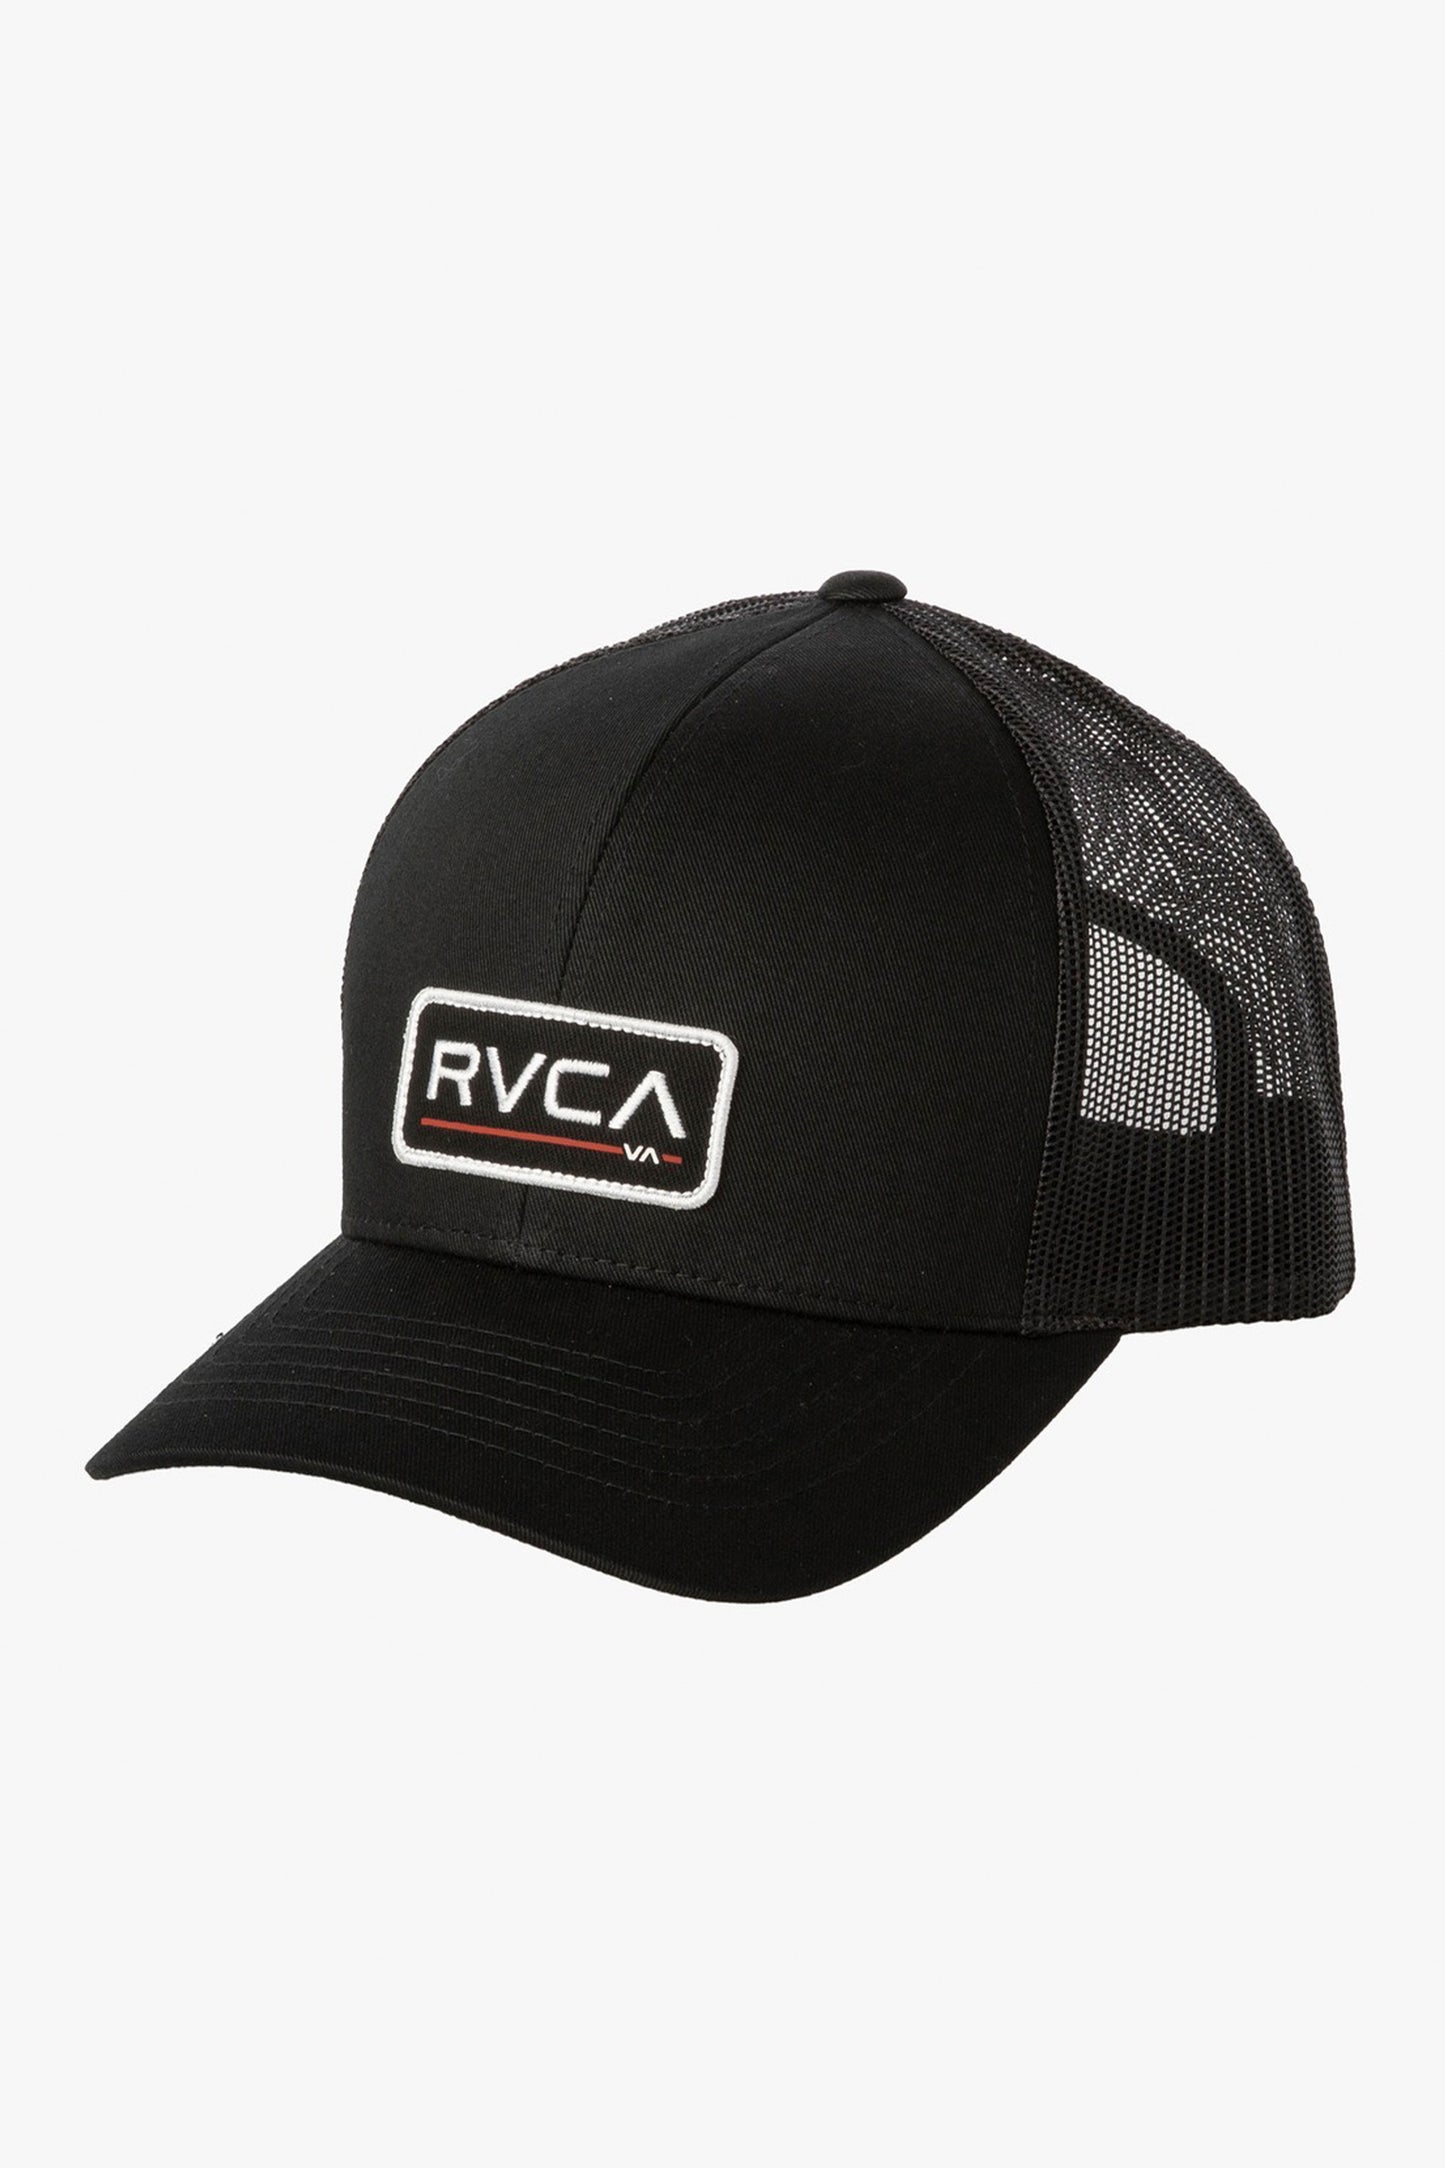 Pukas-Surf-Shop-RVCA-Hat-Ticket-Trcuker